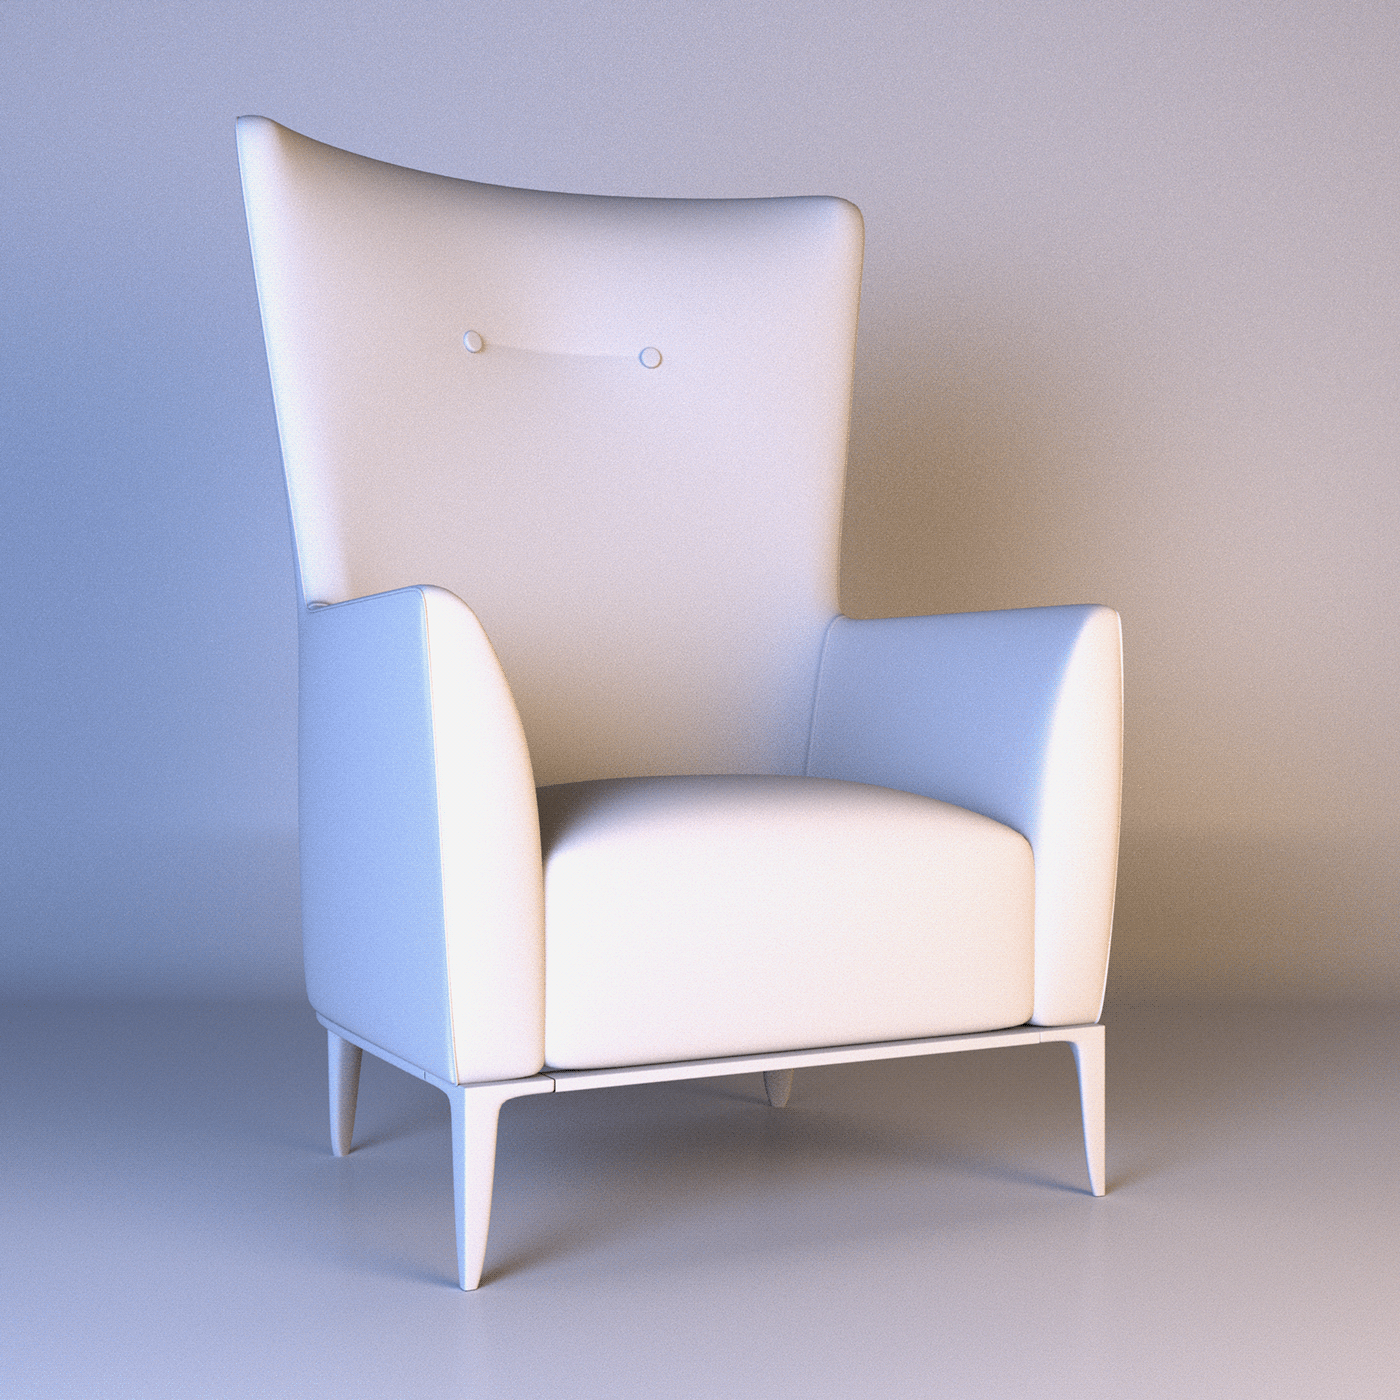 3dmax chair light visualization